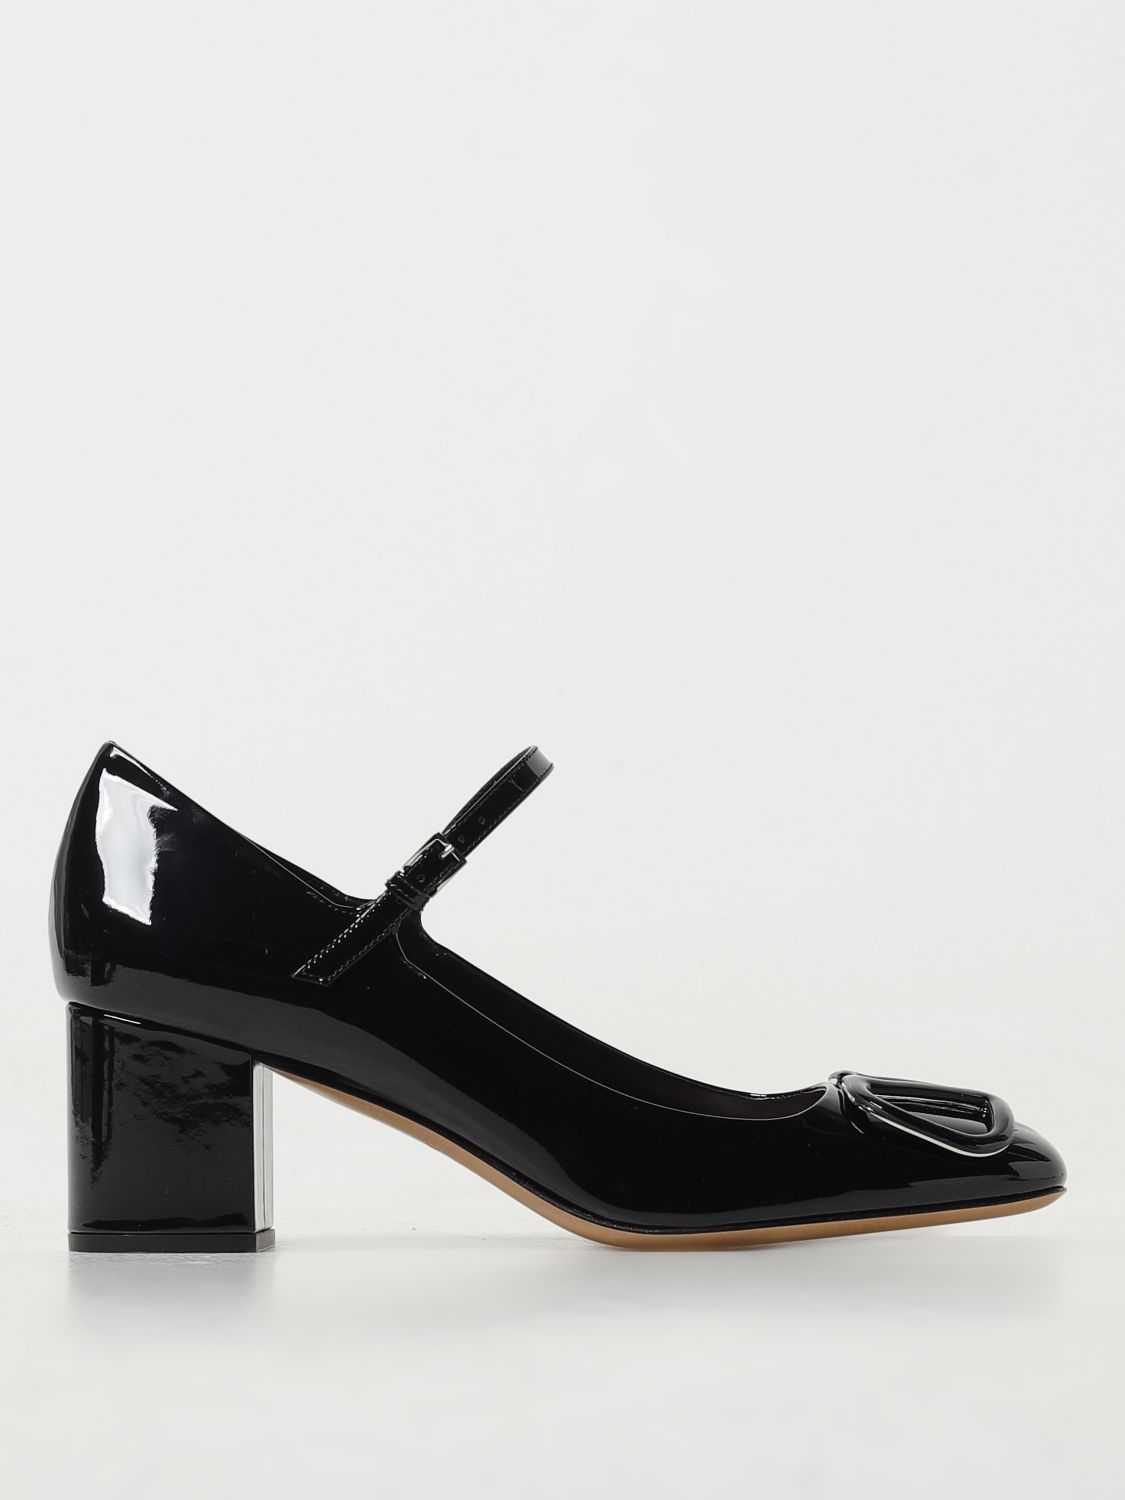 Valentino Garavani High Heel Shoes  Woman Color Black